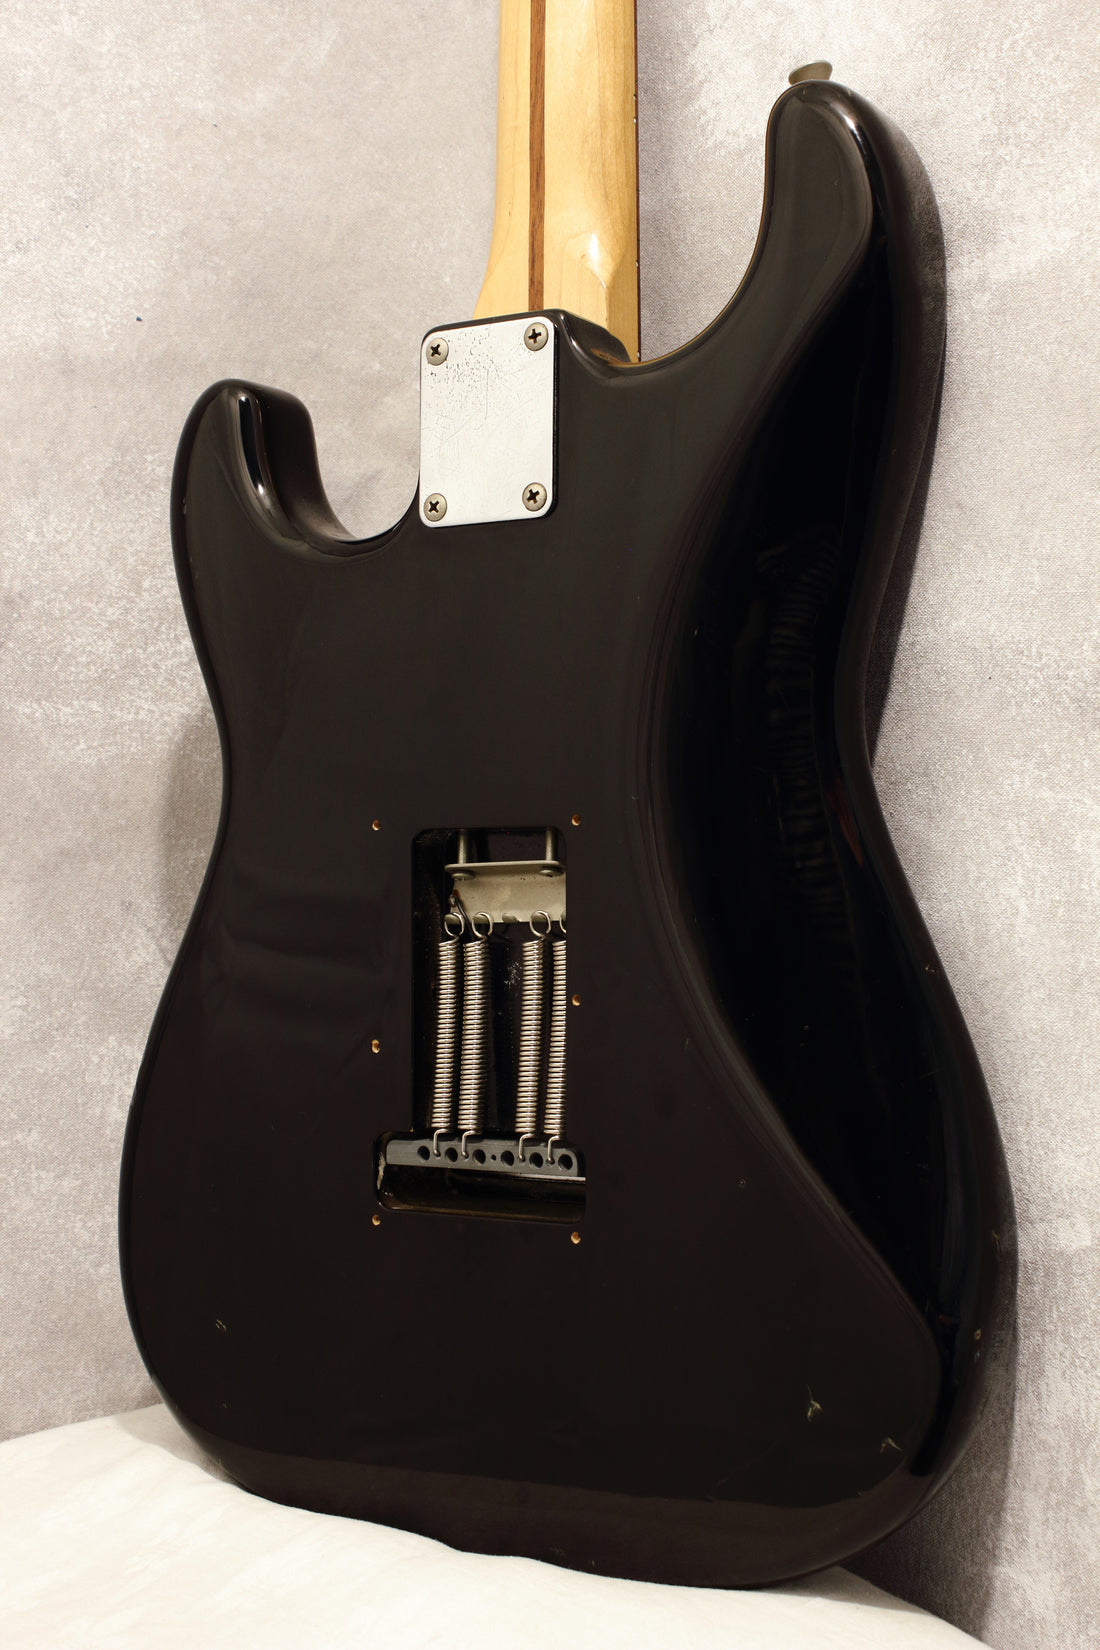 Squier Japan Silver Series Stratocaster SST33 Black 1993